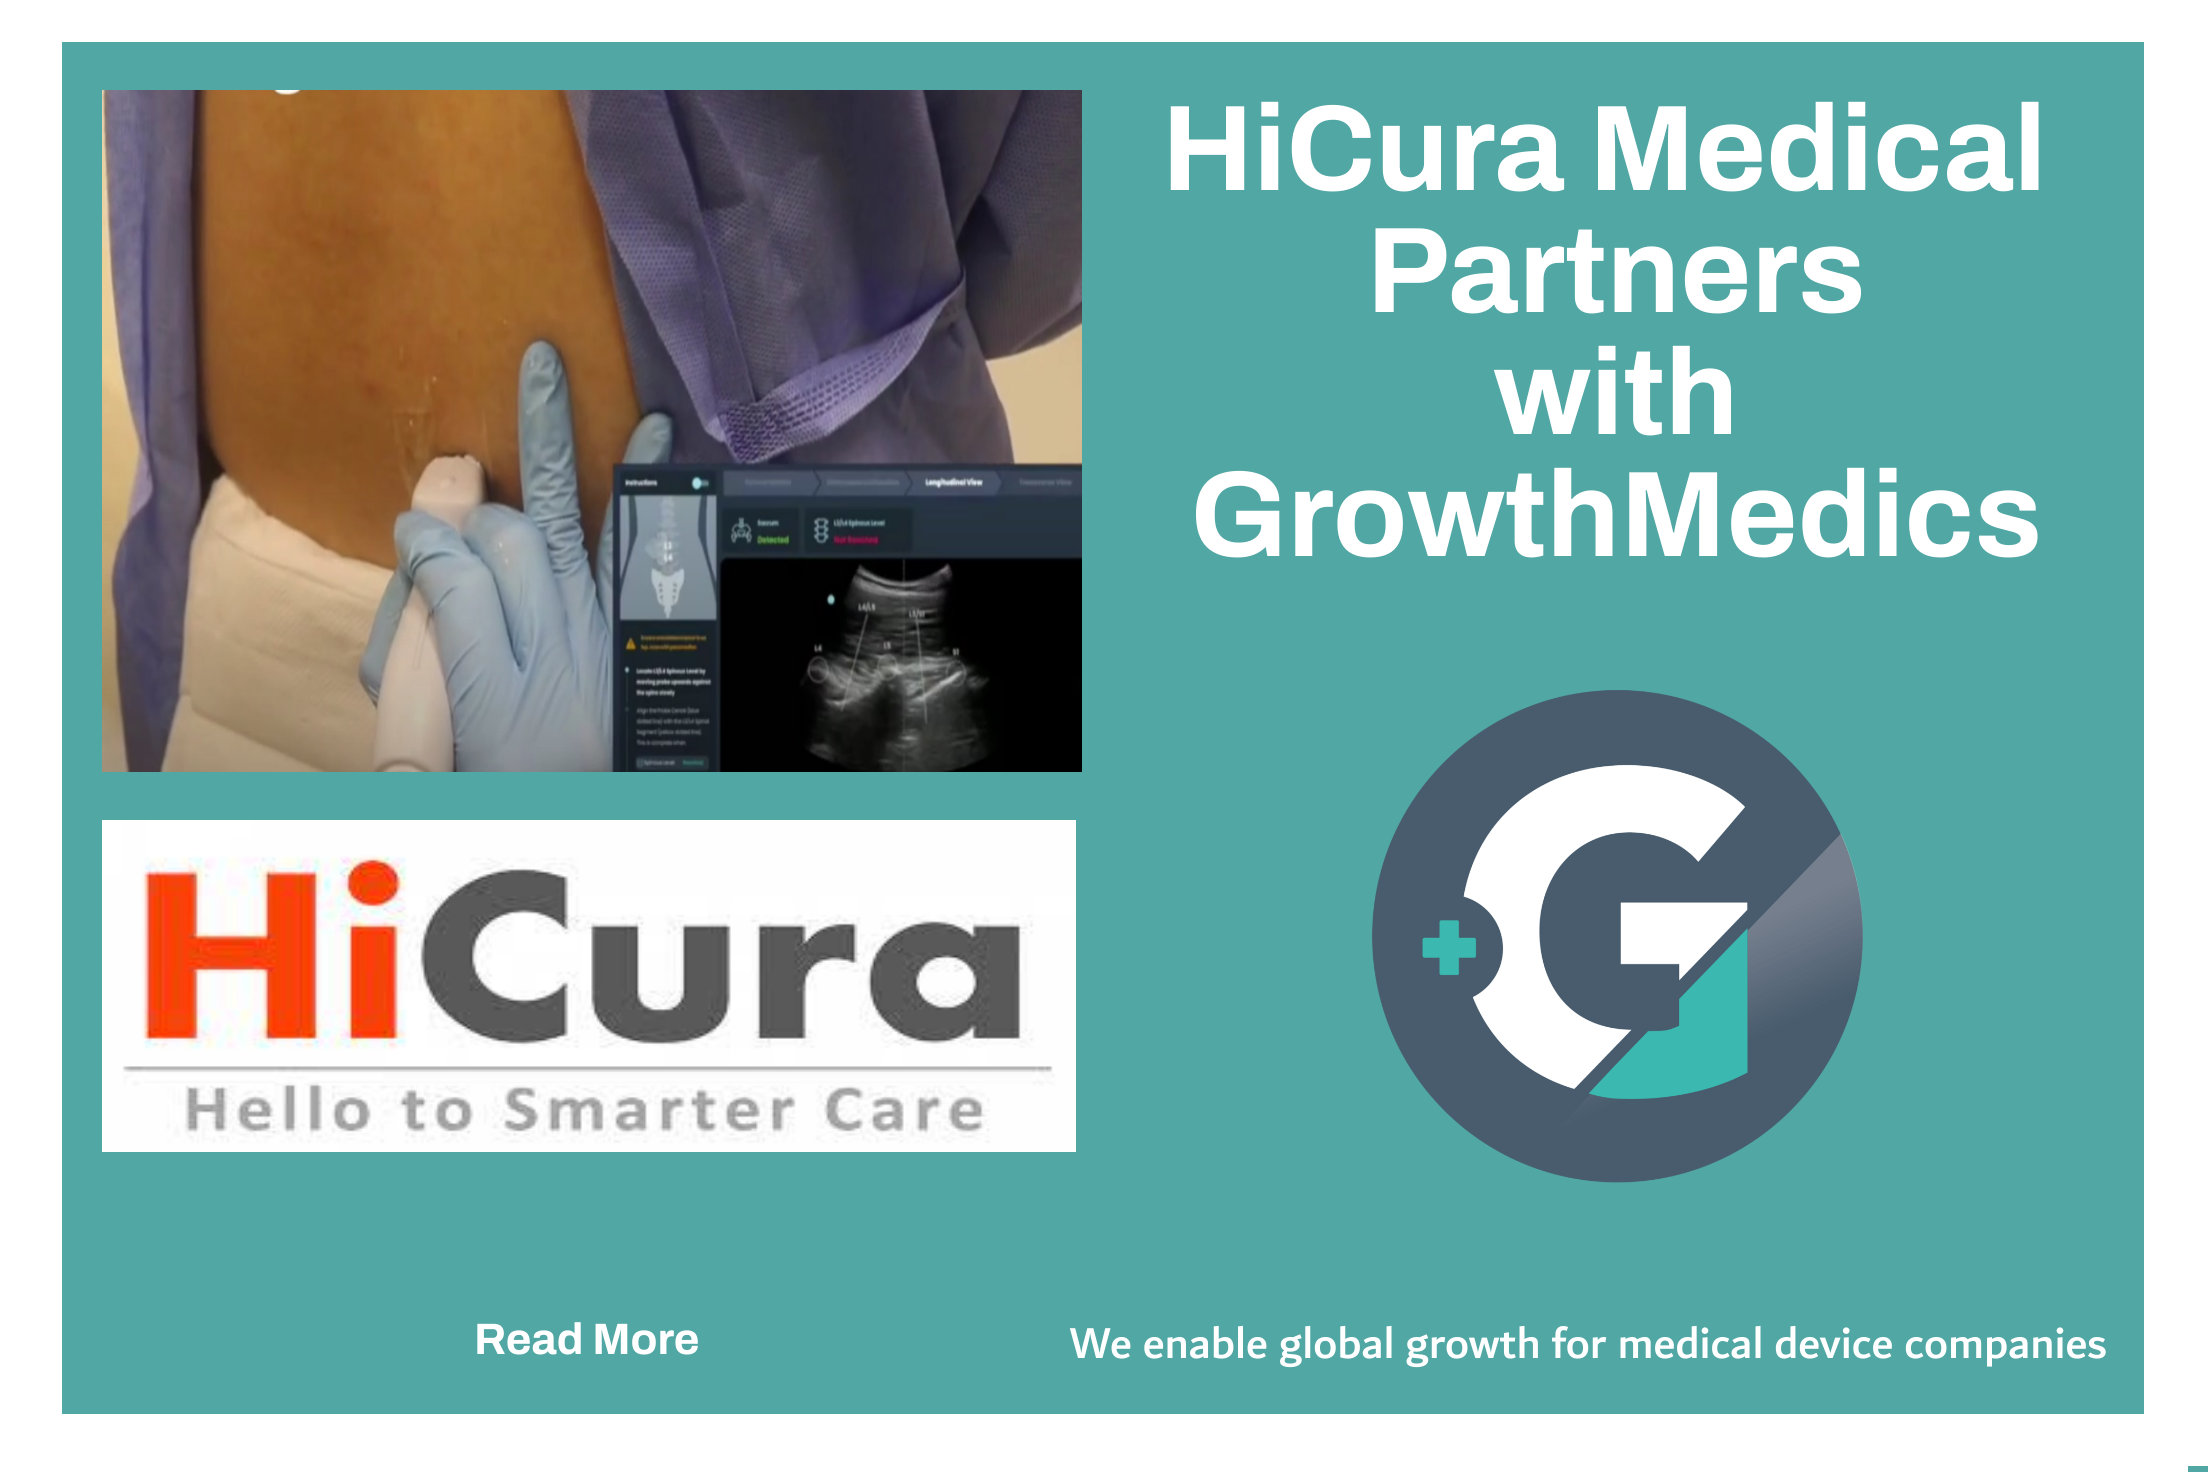 HiCura partners with GrowthMedics